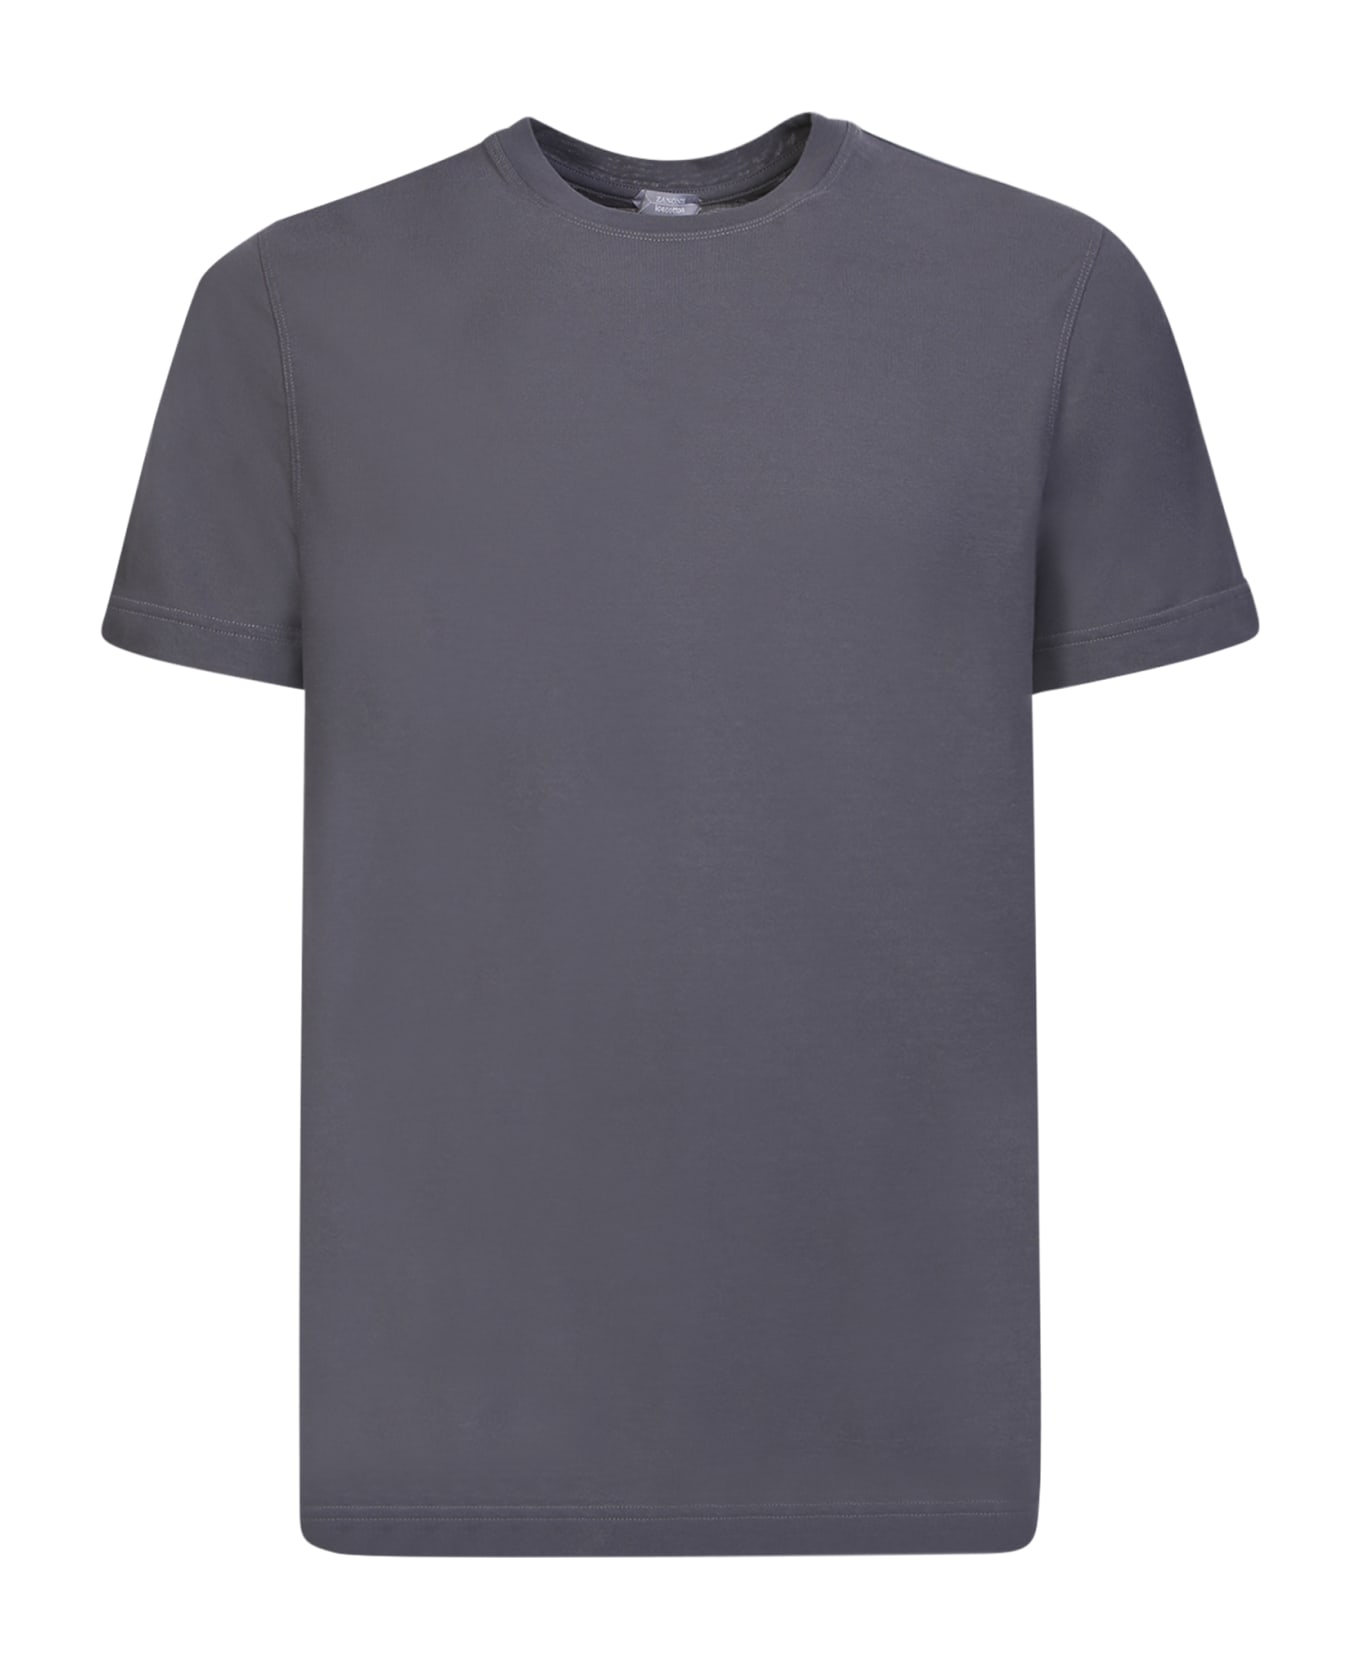 Zanone Grey Cotton T-shirt - Grey